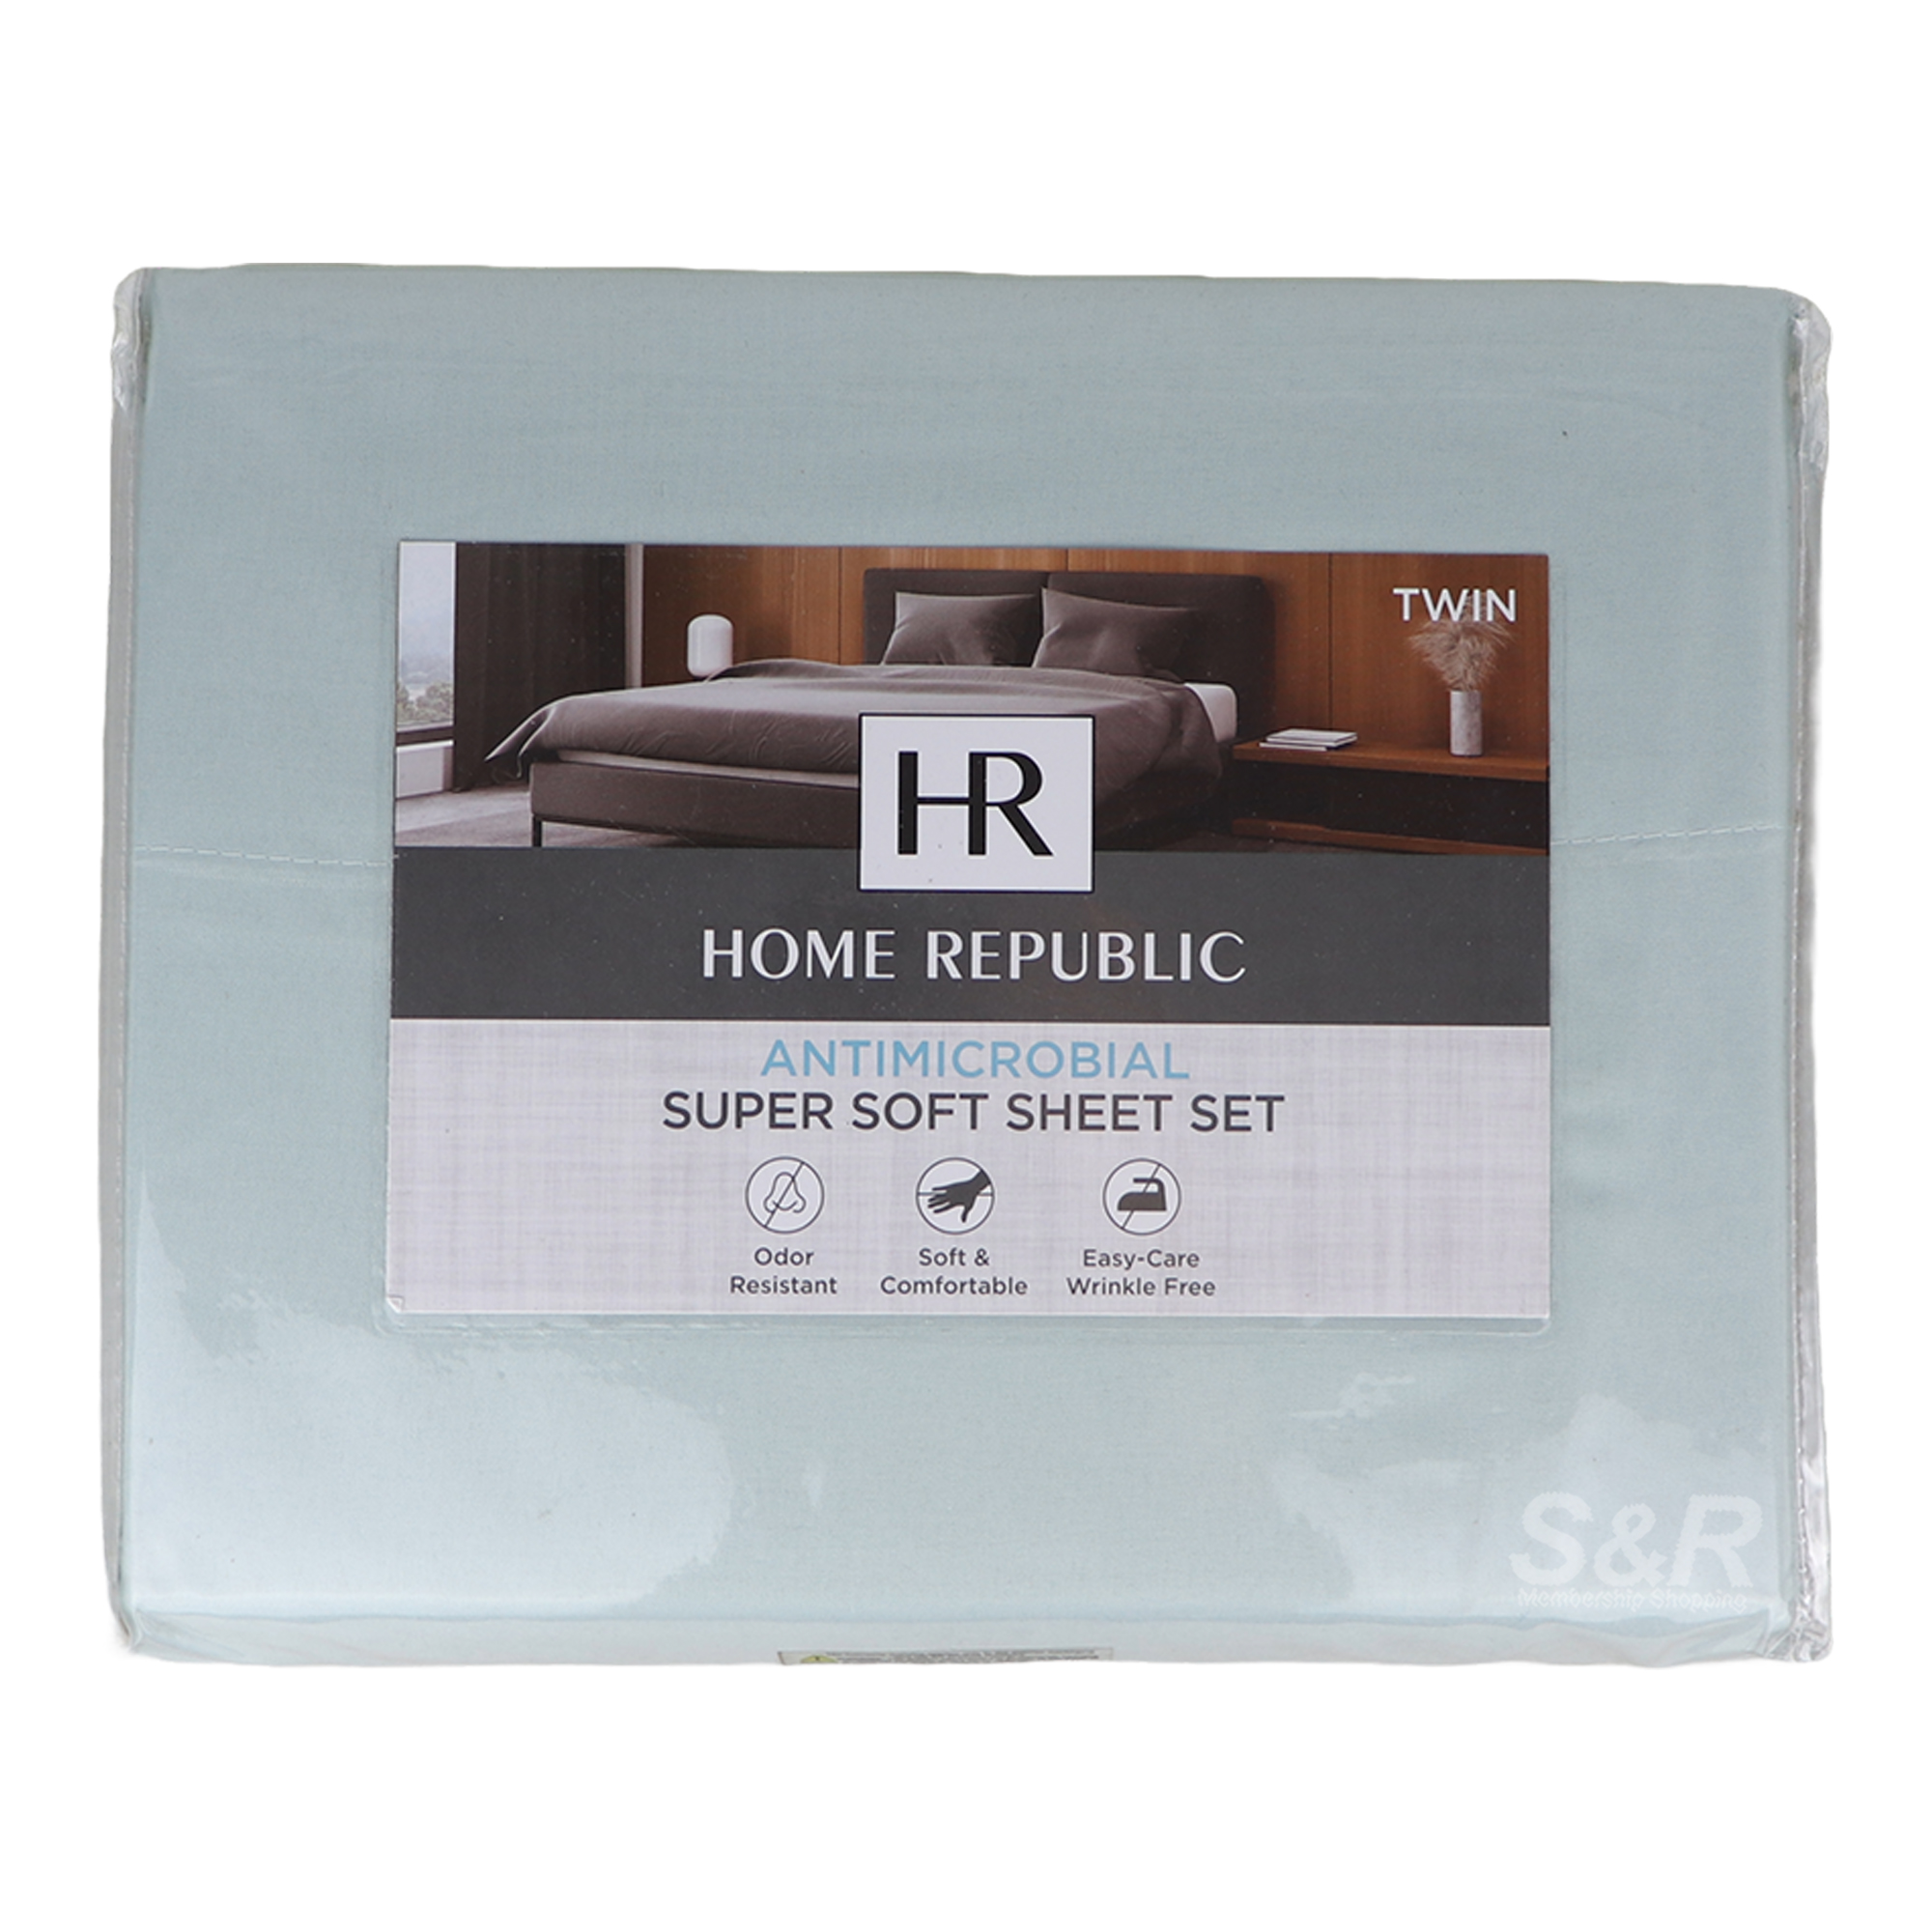 Home Republic Antimicrobial Super Soft Sheet Set Twin